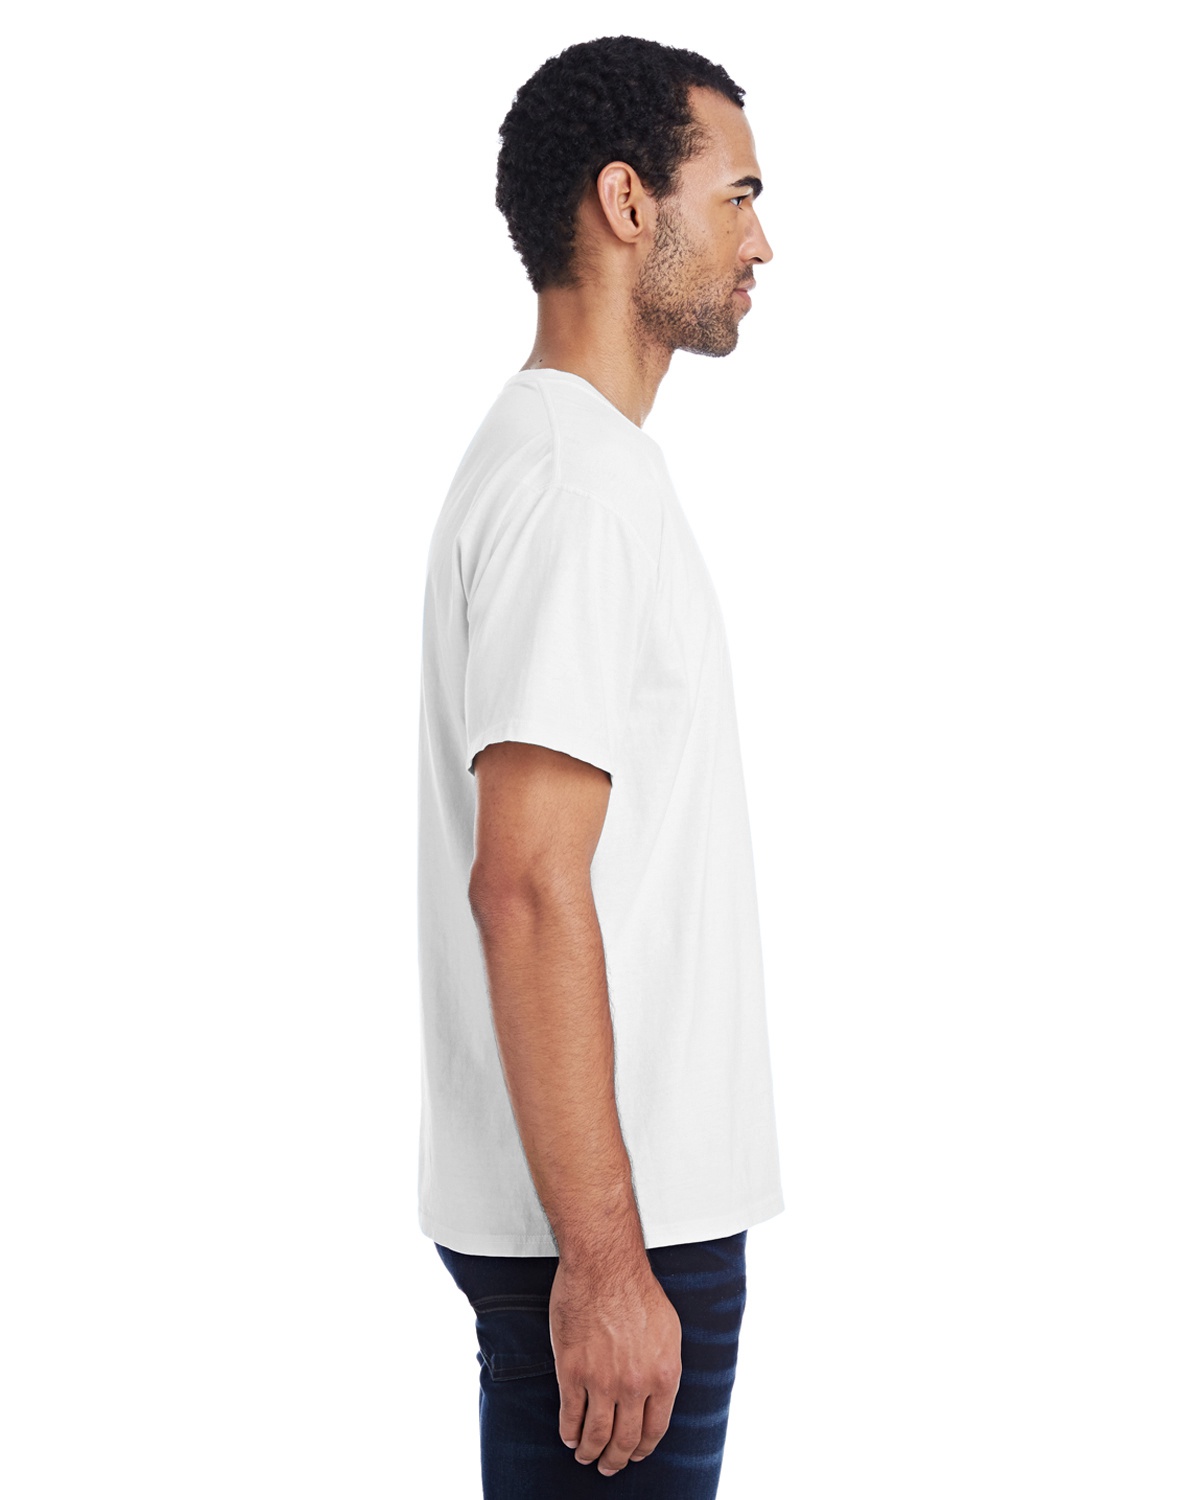 'ComfortWash by Hanes GDH100 Garment Dyed Short Sleeve T-Shirt'